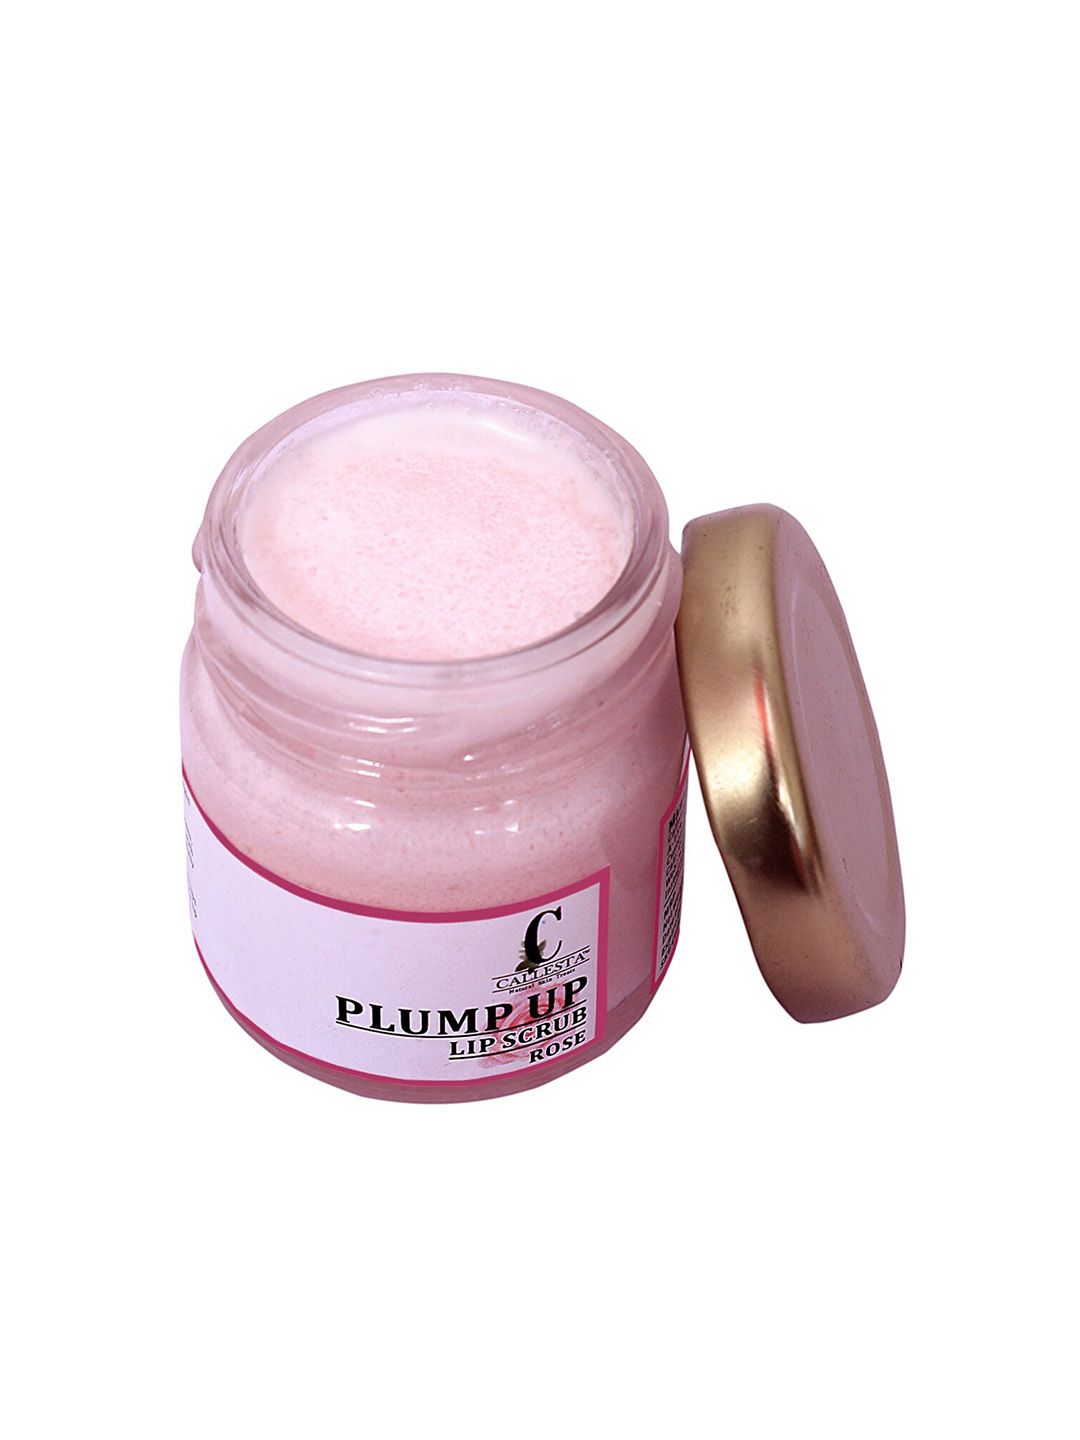 Callesta Pink Plump Up Exfoliating Rose Lip Scrub Price in India